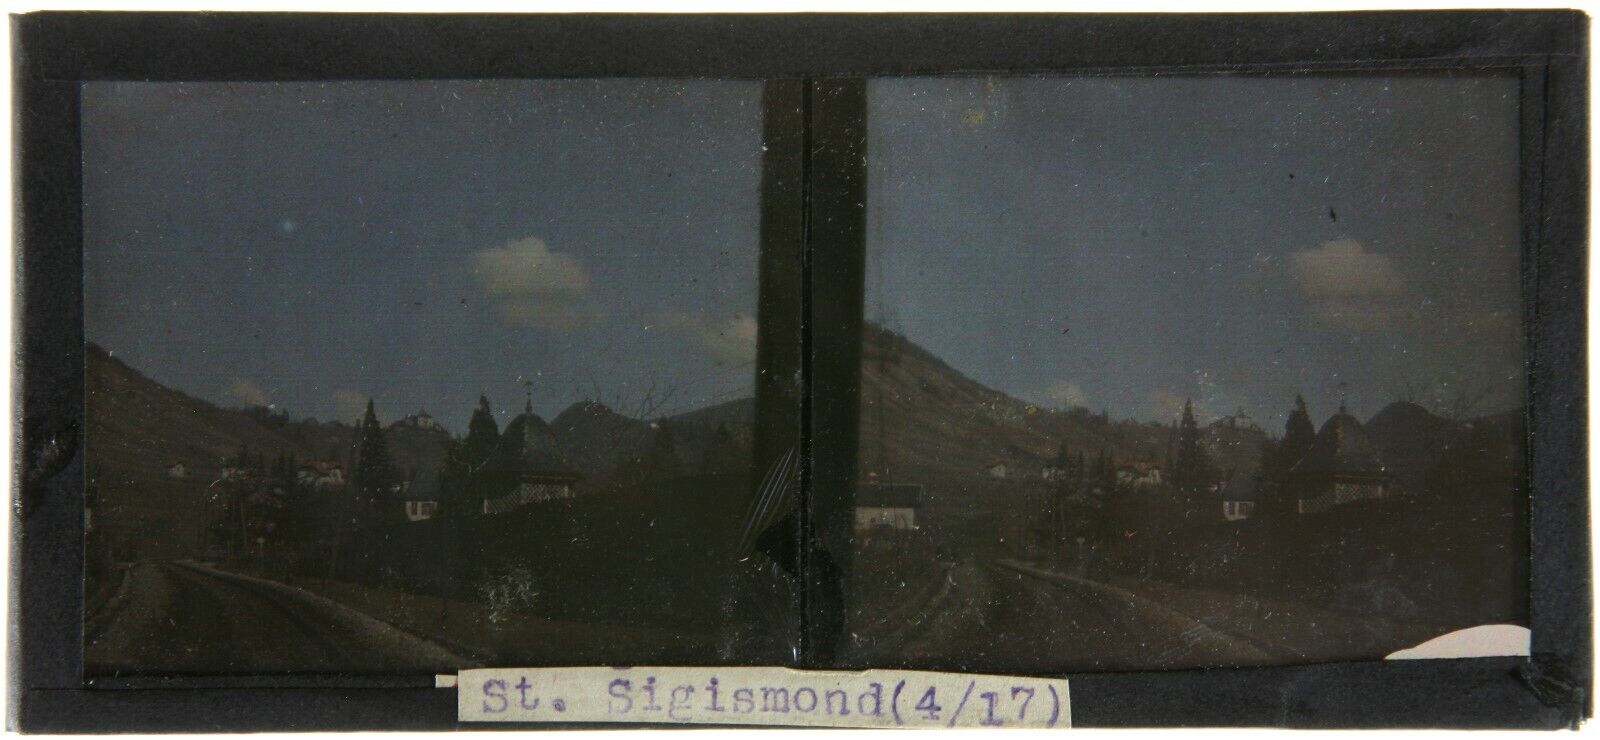 Saint Sigismund.Haute-Savoie.(74)Autochrome stereo.Stereoscopic view.6x13cm.